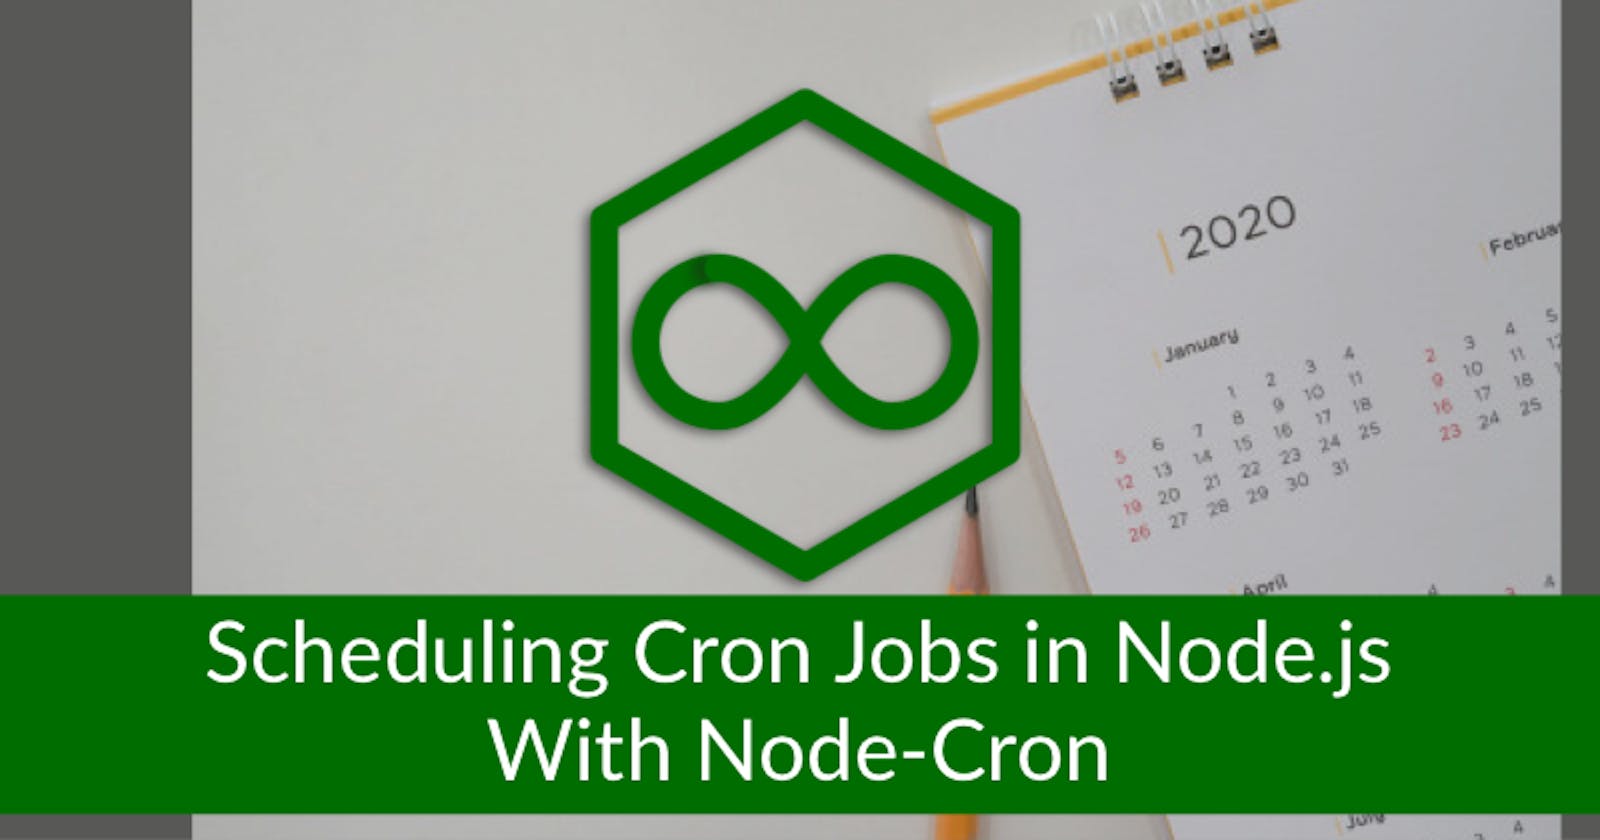 Scheduling Cron Jobs in Node.js with Node-Cron